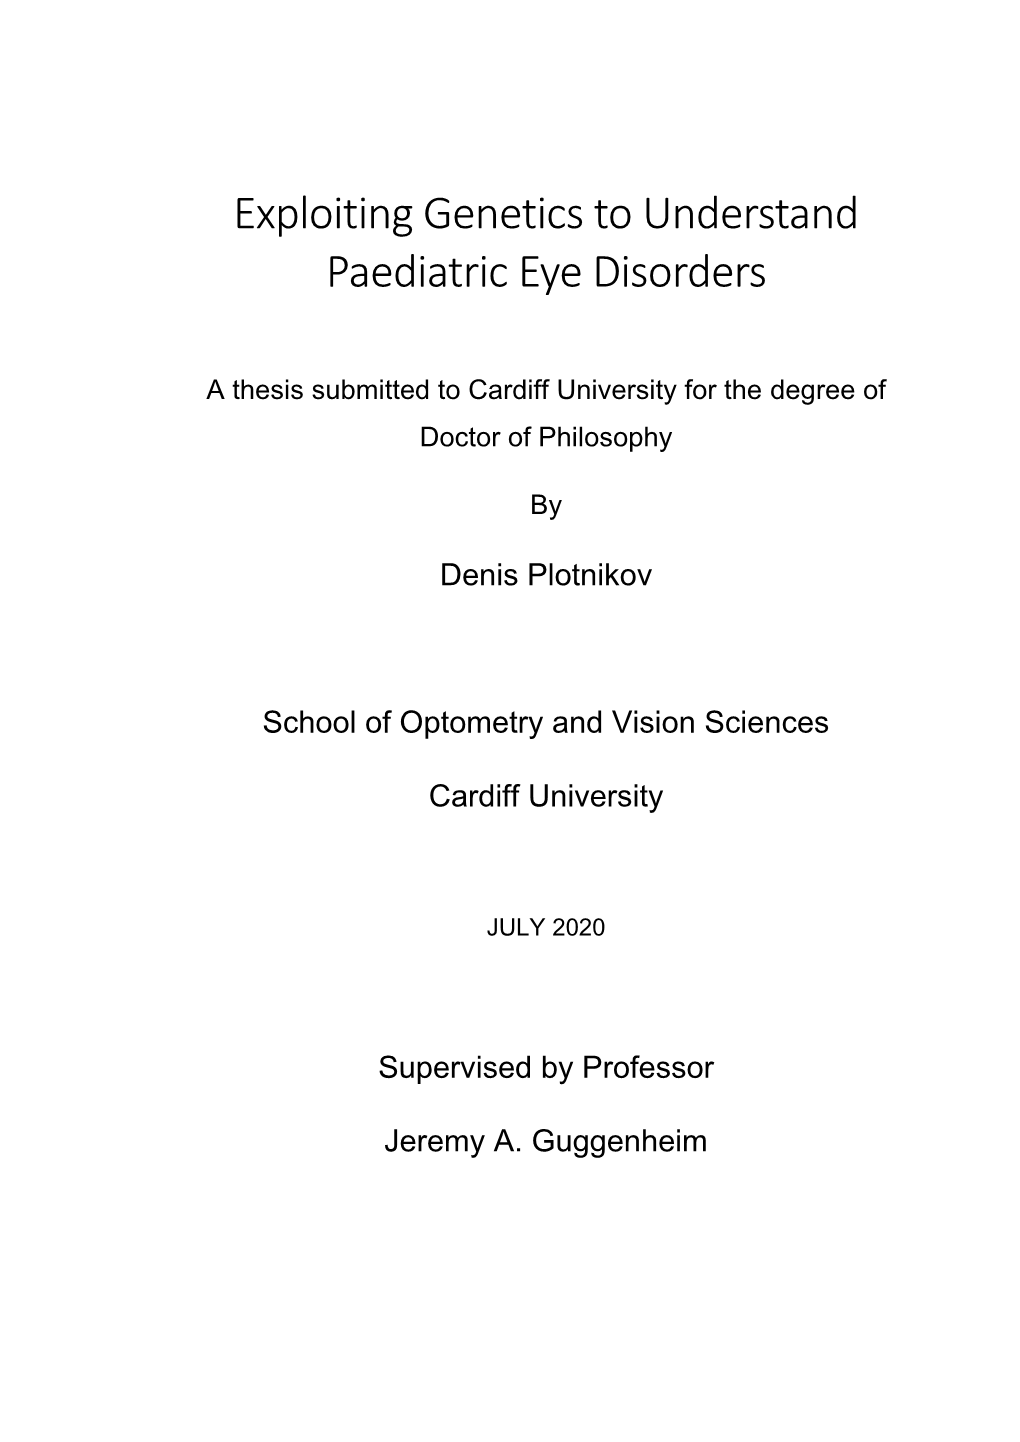 Exploiting Genetics to Understand Paediatric Eye Disorders